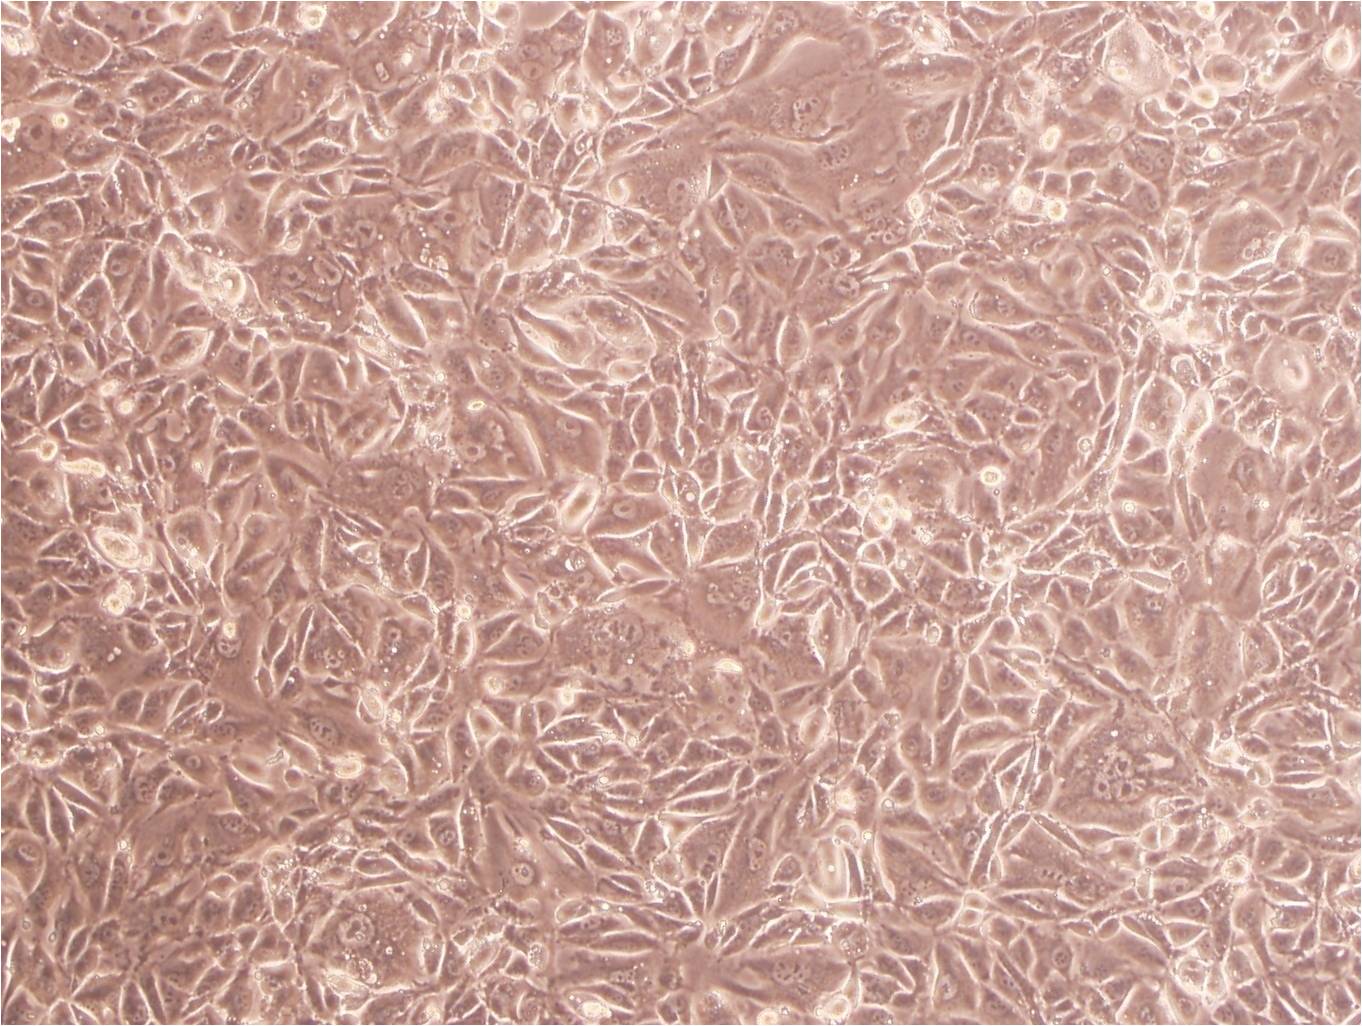 HKC cell line人胚肾小管上皮细胞系